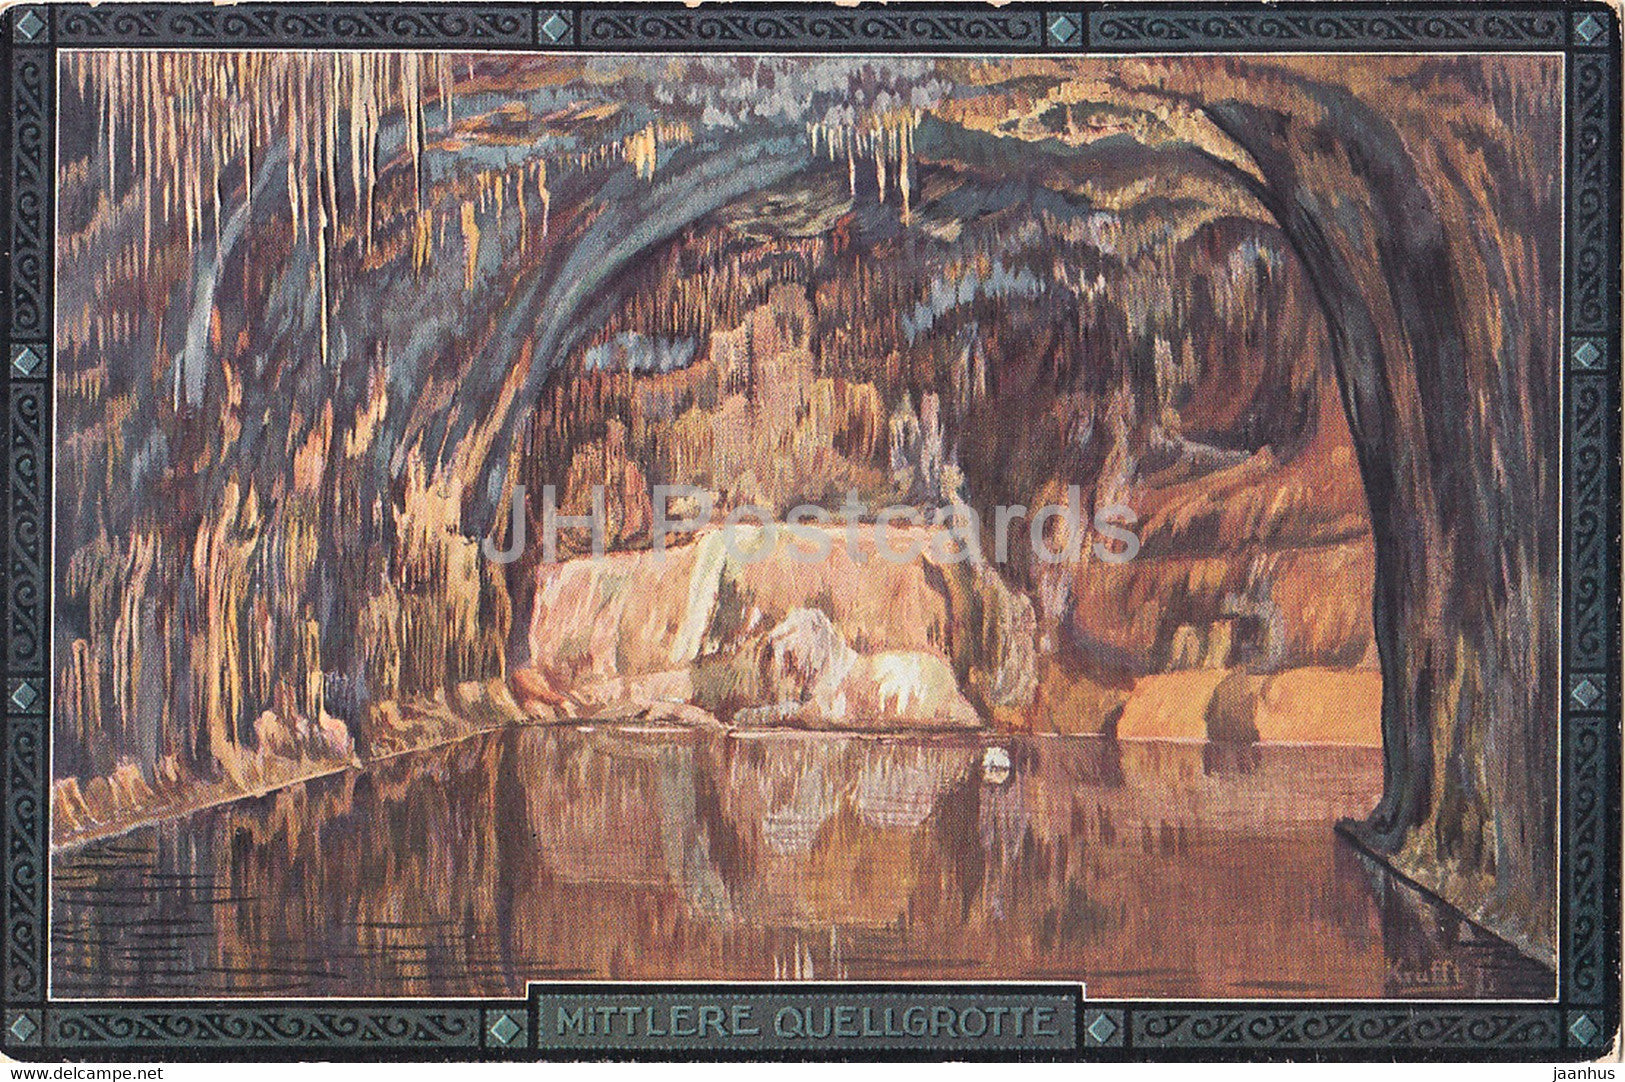 Feengrotten von Saalfeld in Th - Mittlere Quellgrotte - cave - 2 - old postcard - Germany - unused - JH Postcards